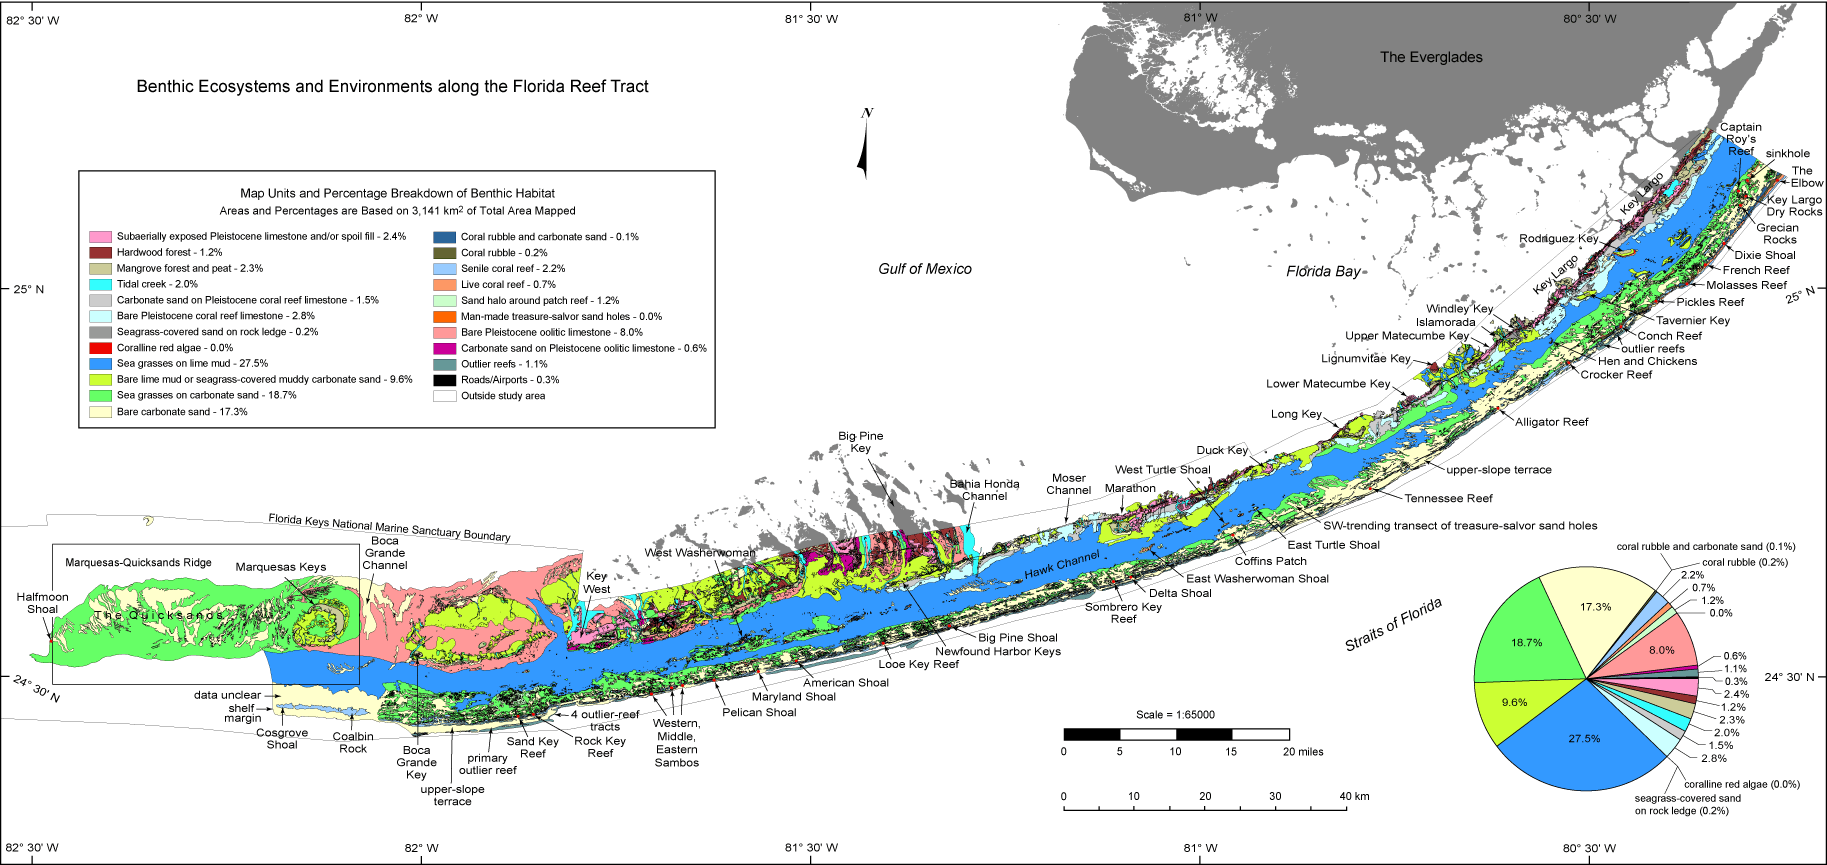 Key Largo Tide Chart